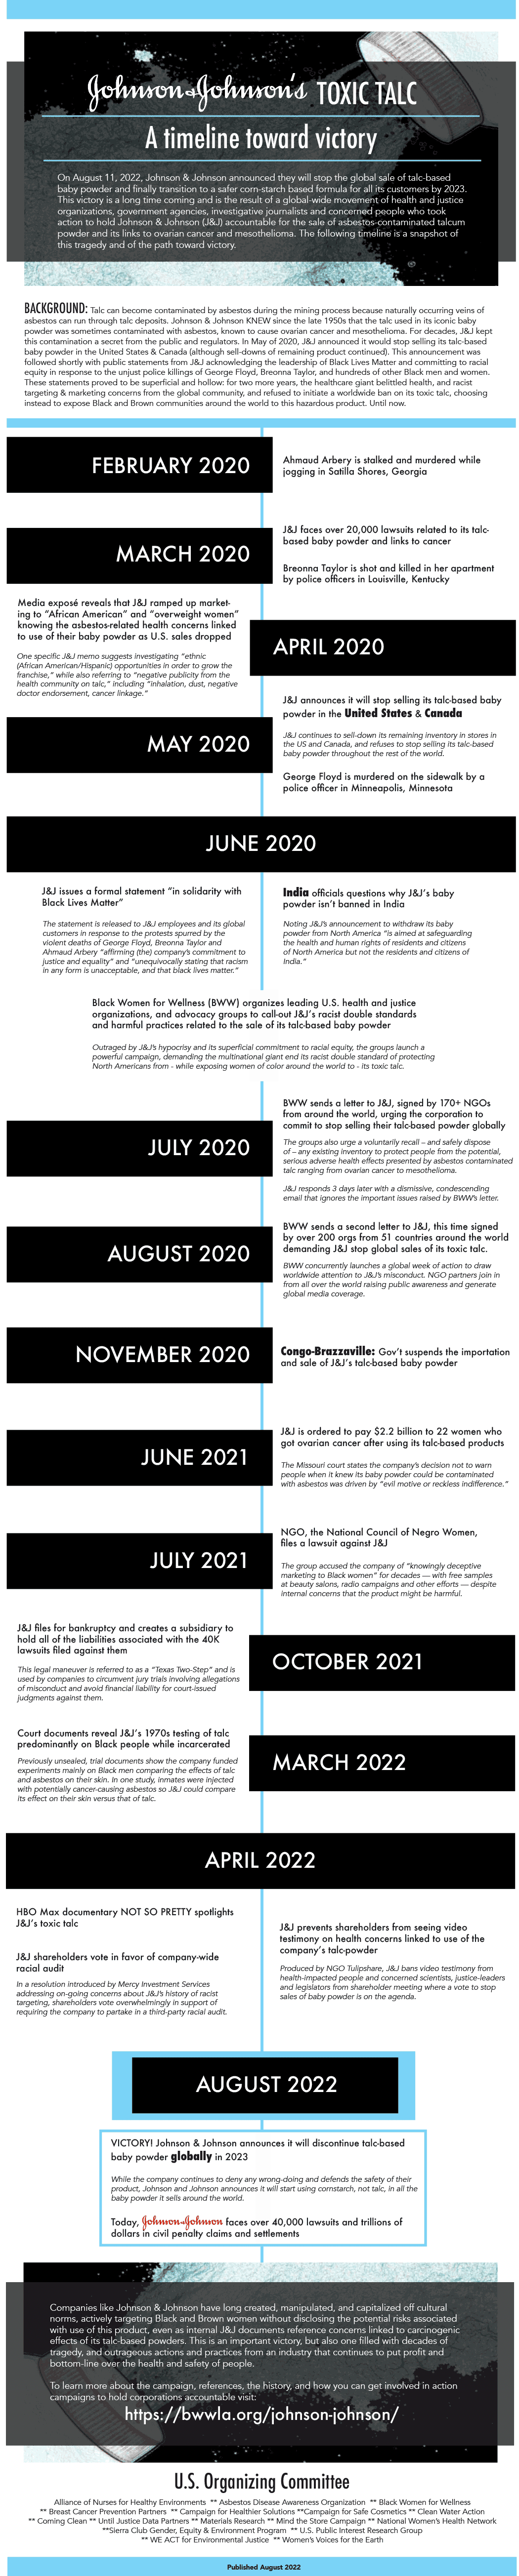 Timeline of J&J toxic talc campaign